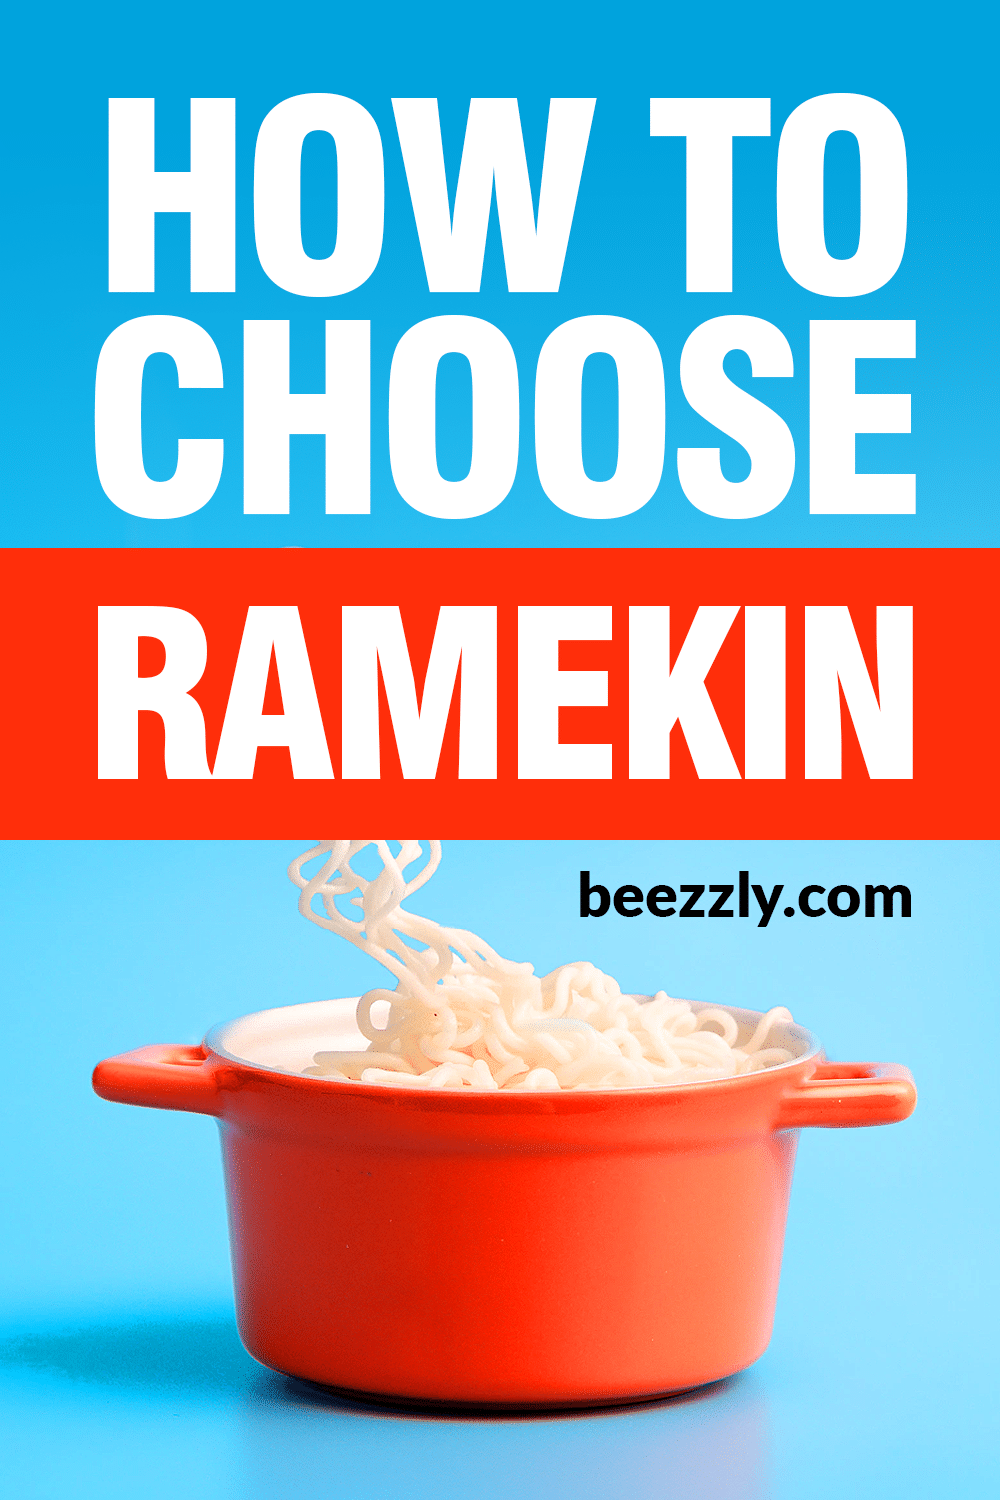 How to choose ramekin